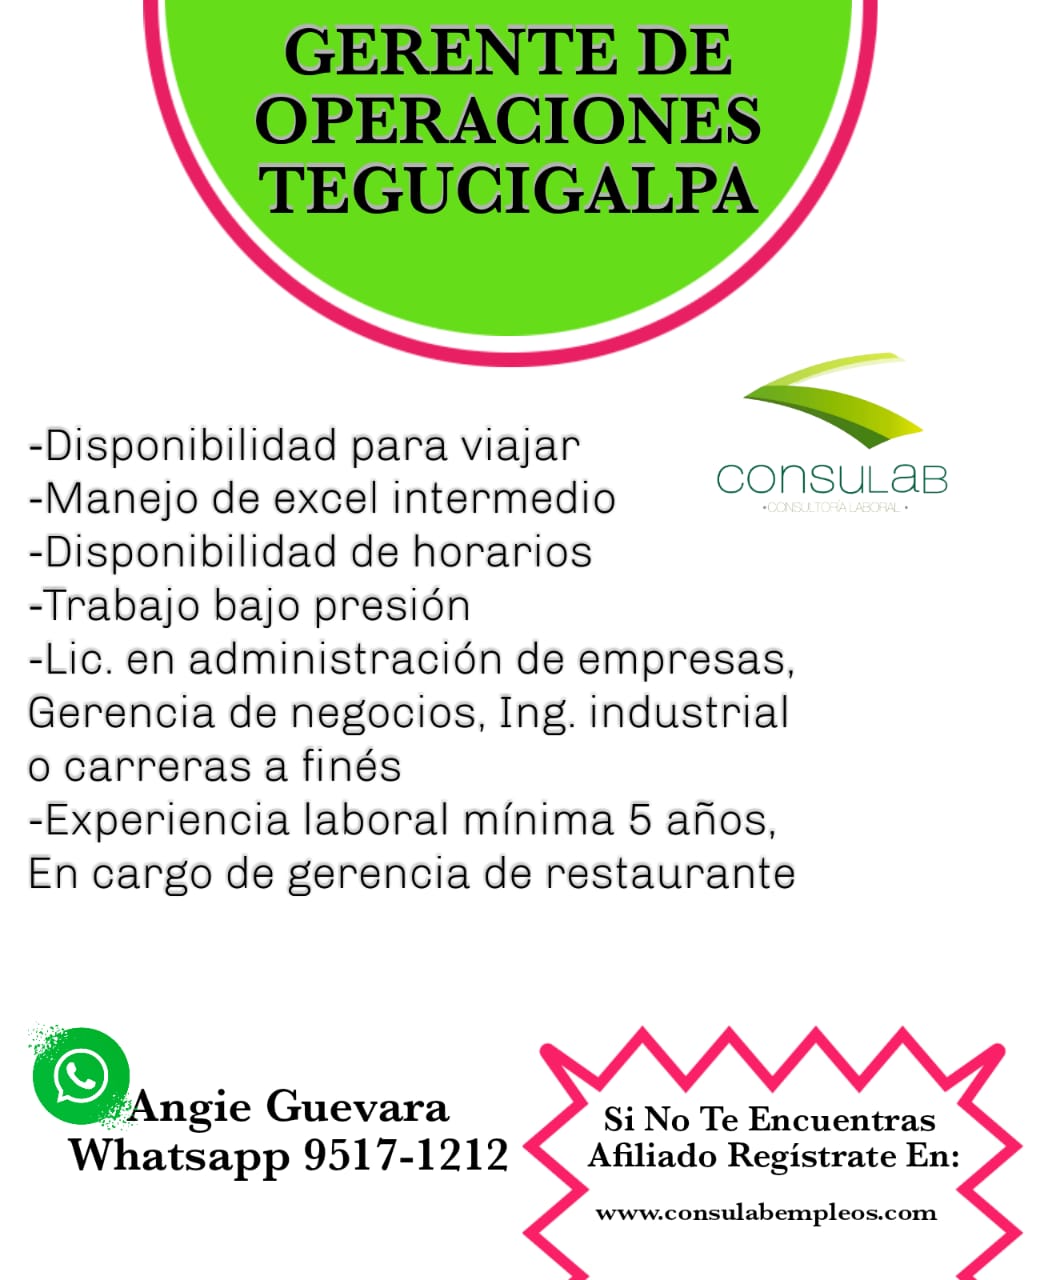 Gerente de operaciones Tegucigalpa